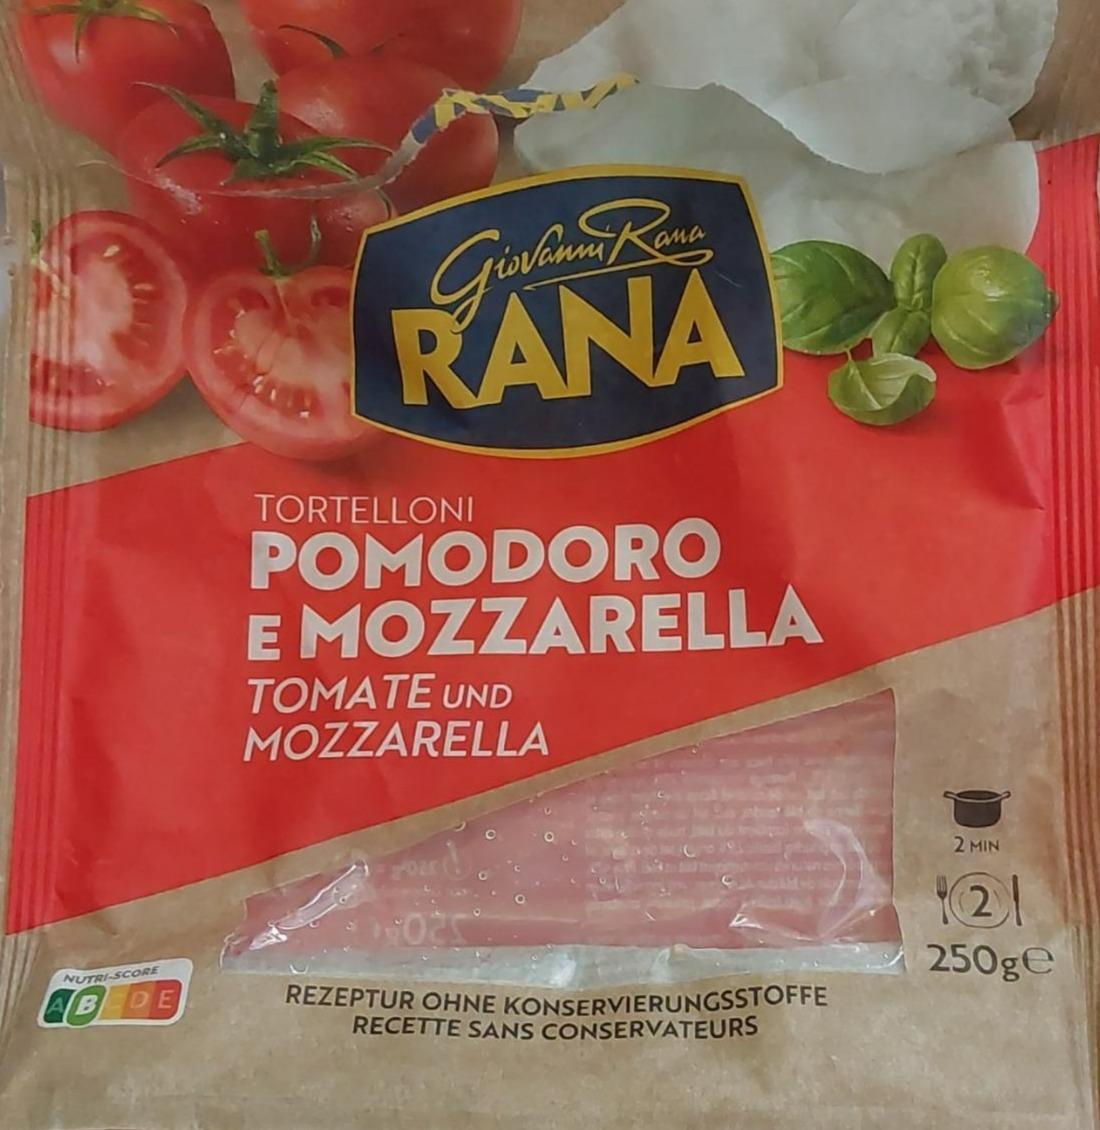 Fotografie - Tortelloni pomodoro e mozzarella Giovanni Rana